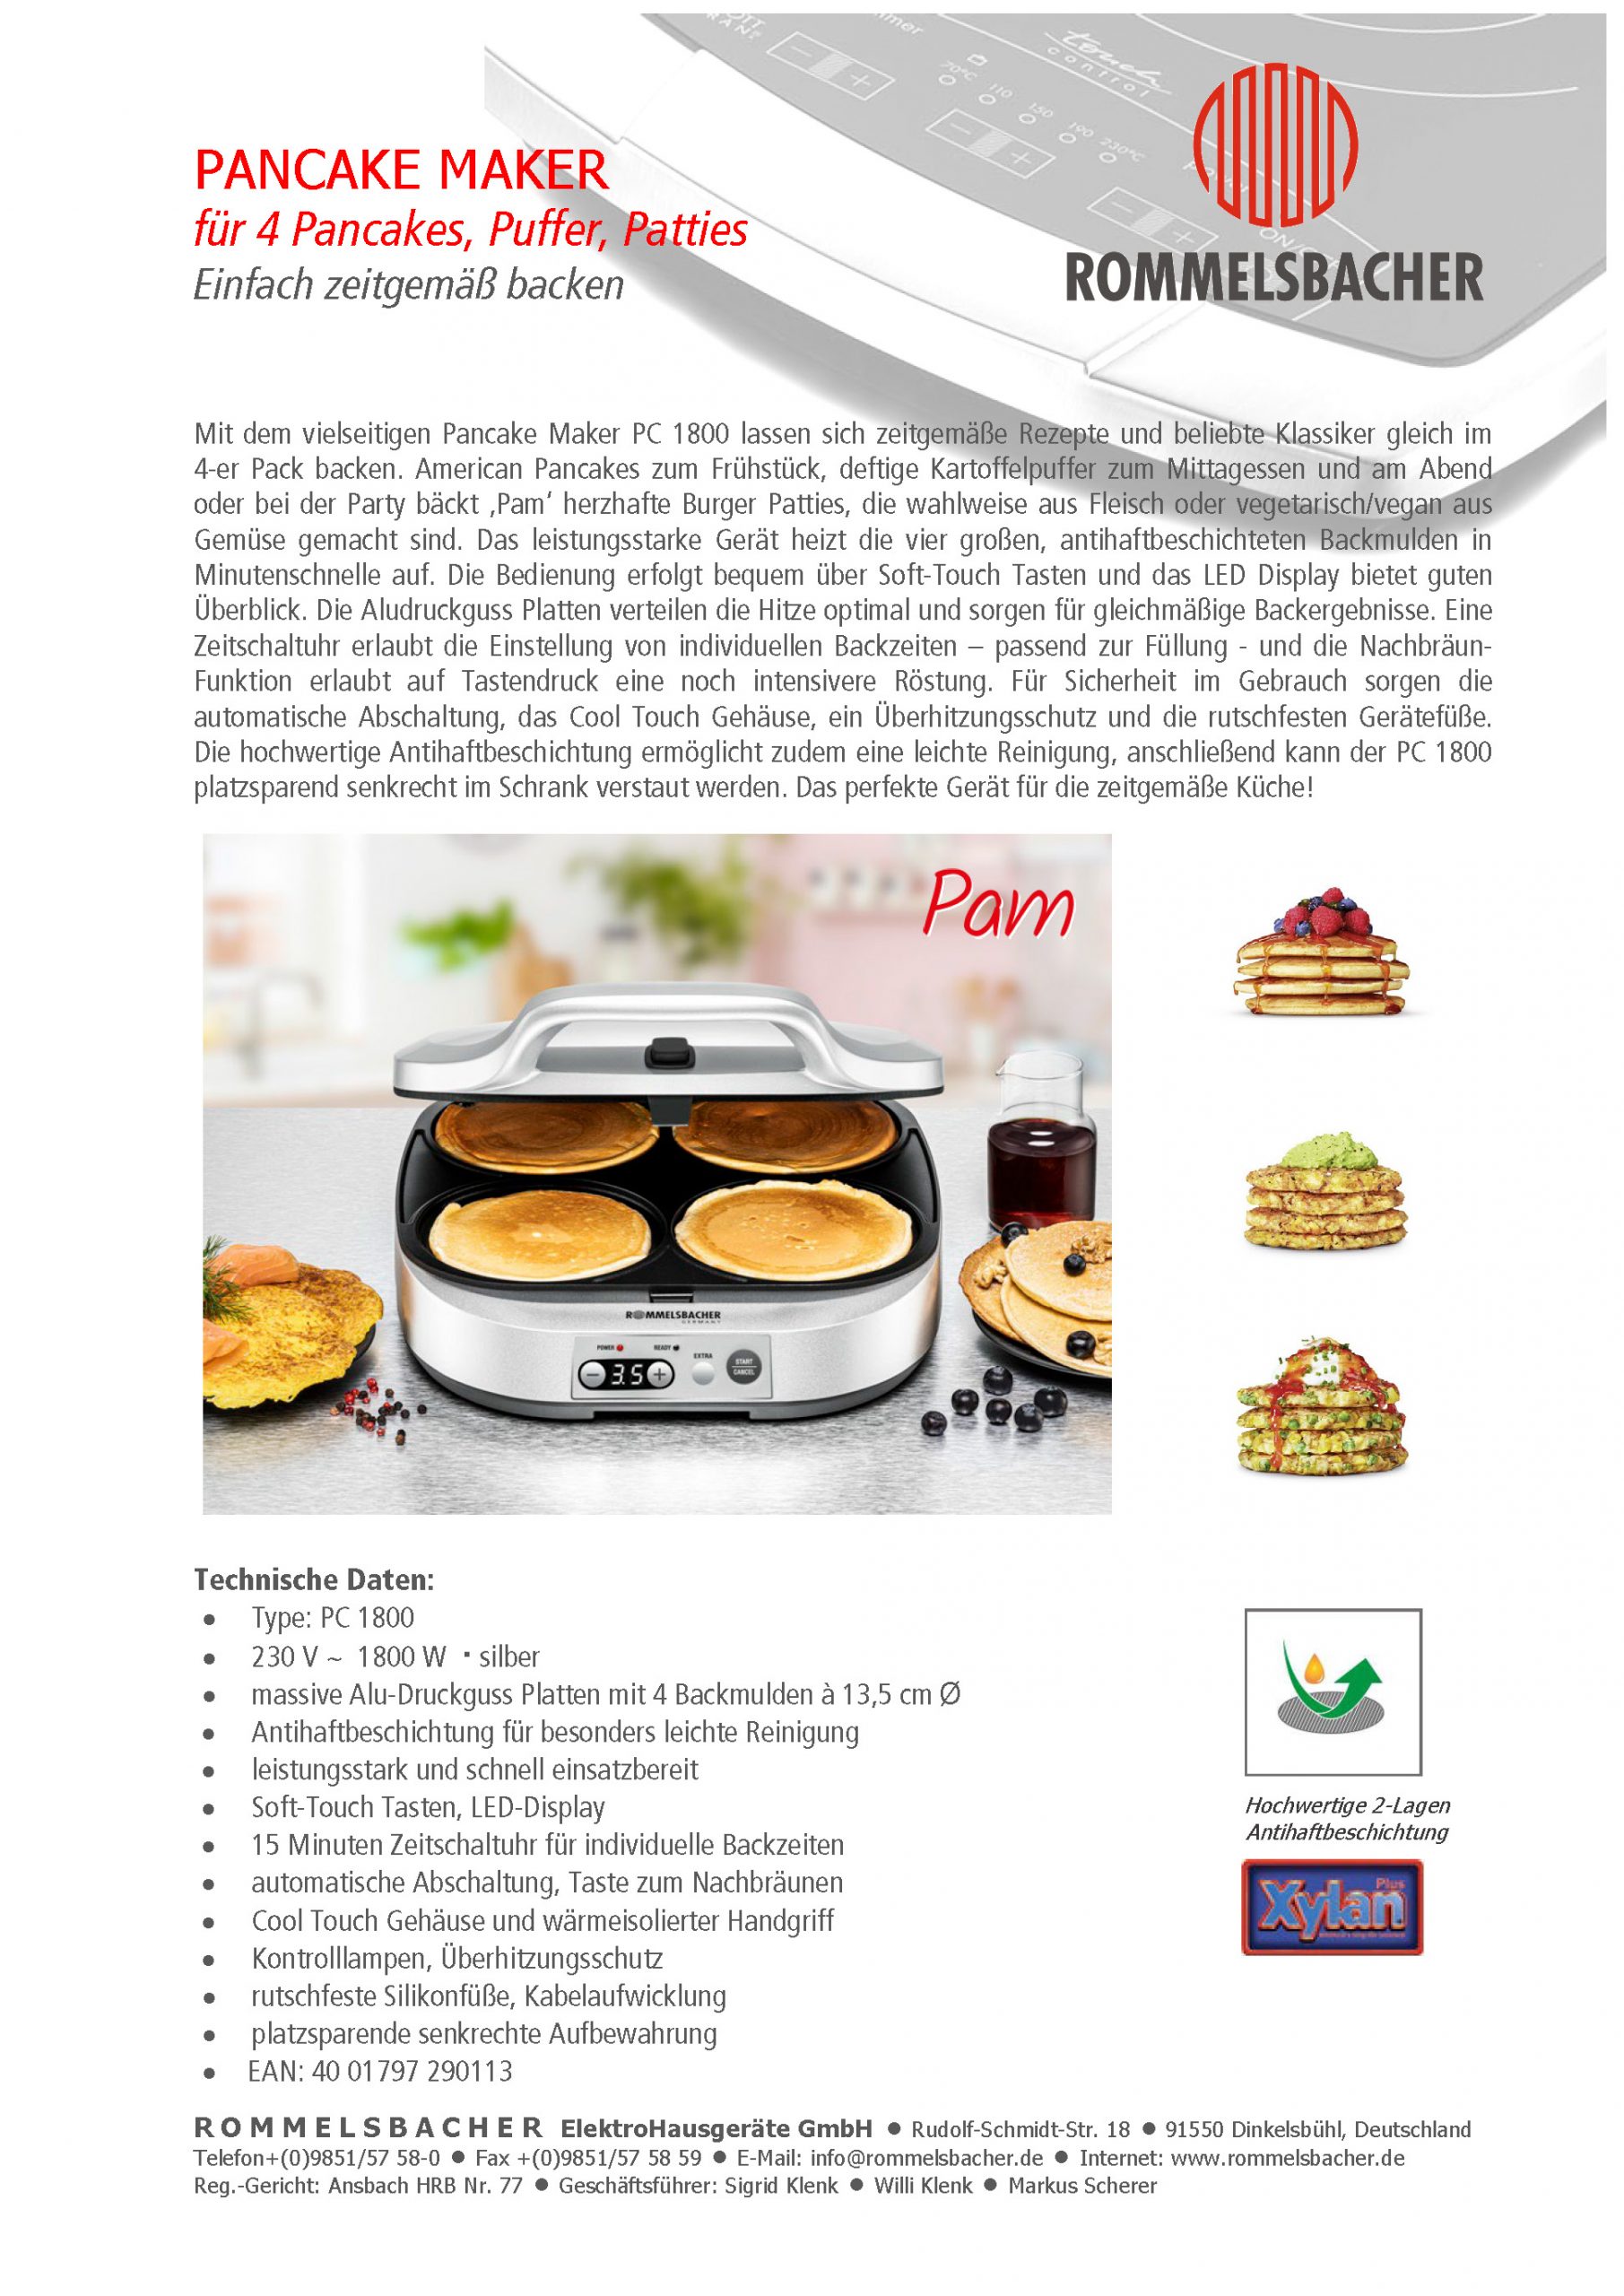 ROMMELSBACHRER Produktdatenblatt Pancake Maker PC 1800 Pam